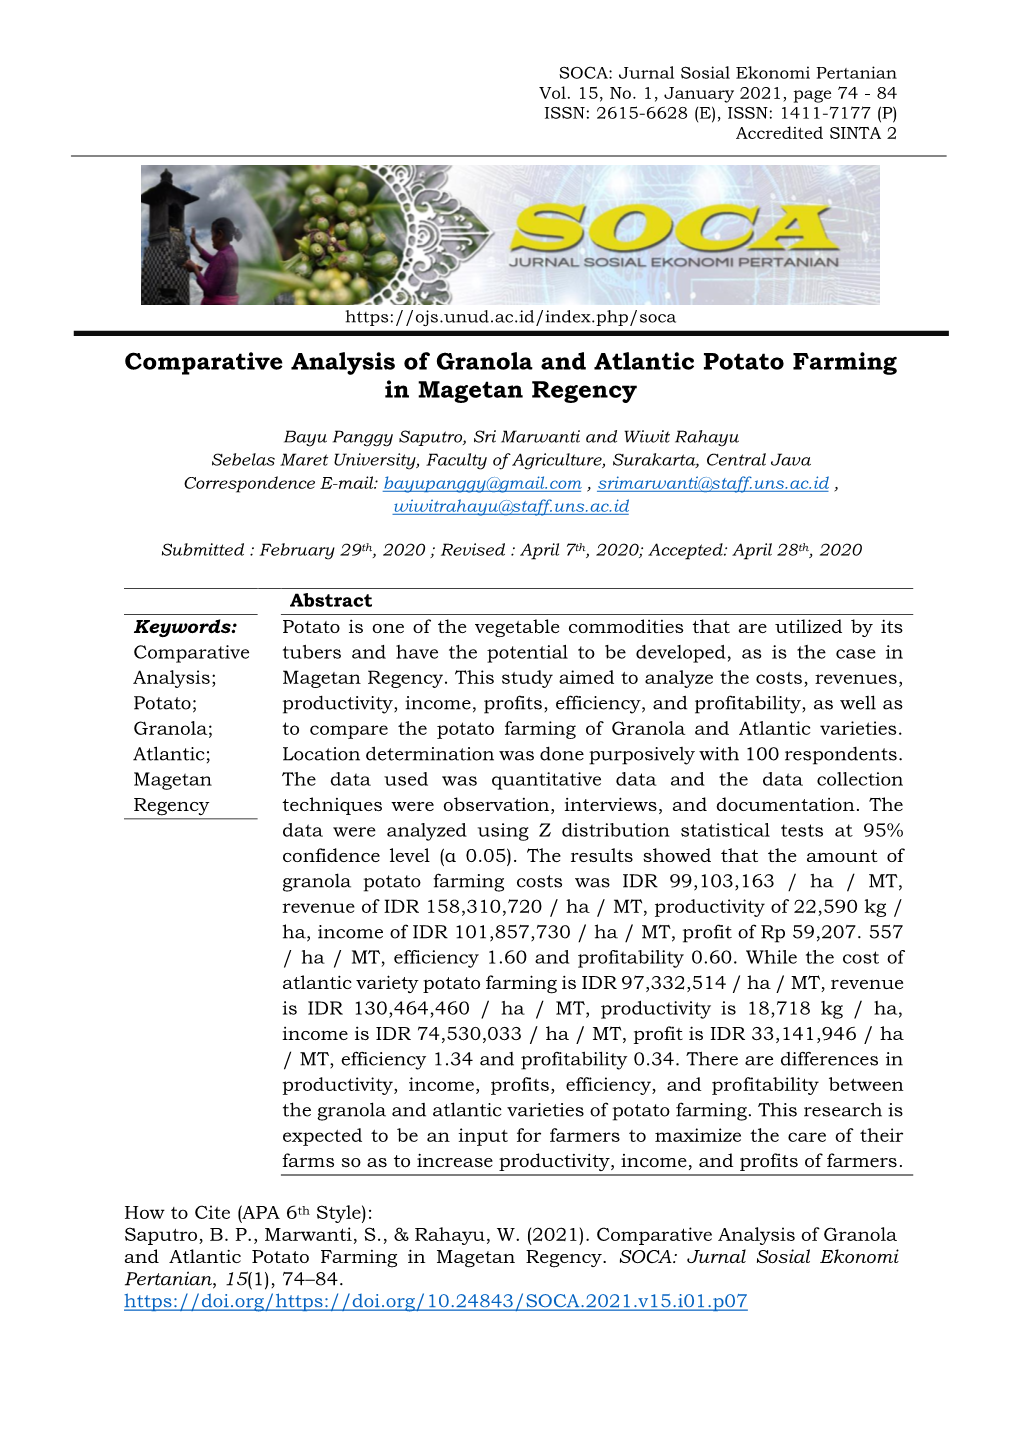 Comparative Analysis of Granola and Atlantic Potato Farming in Magetan Regency